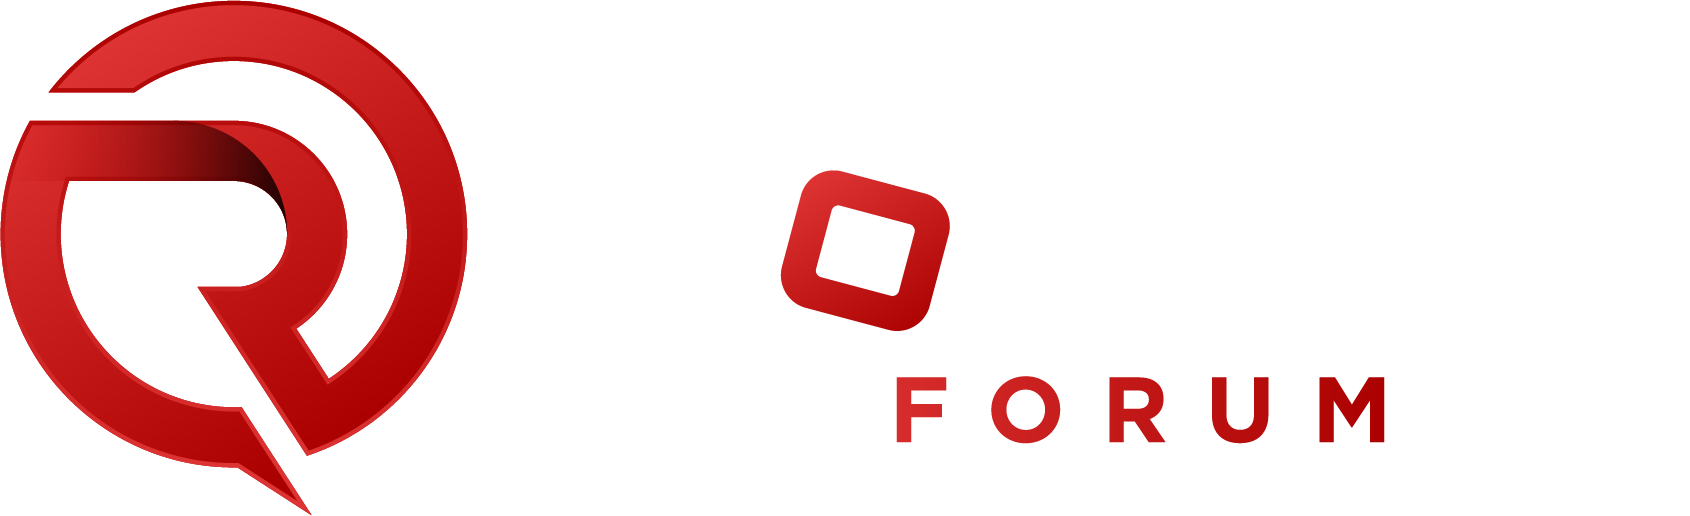 Roblox Forum Logo PNG image